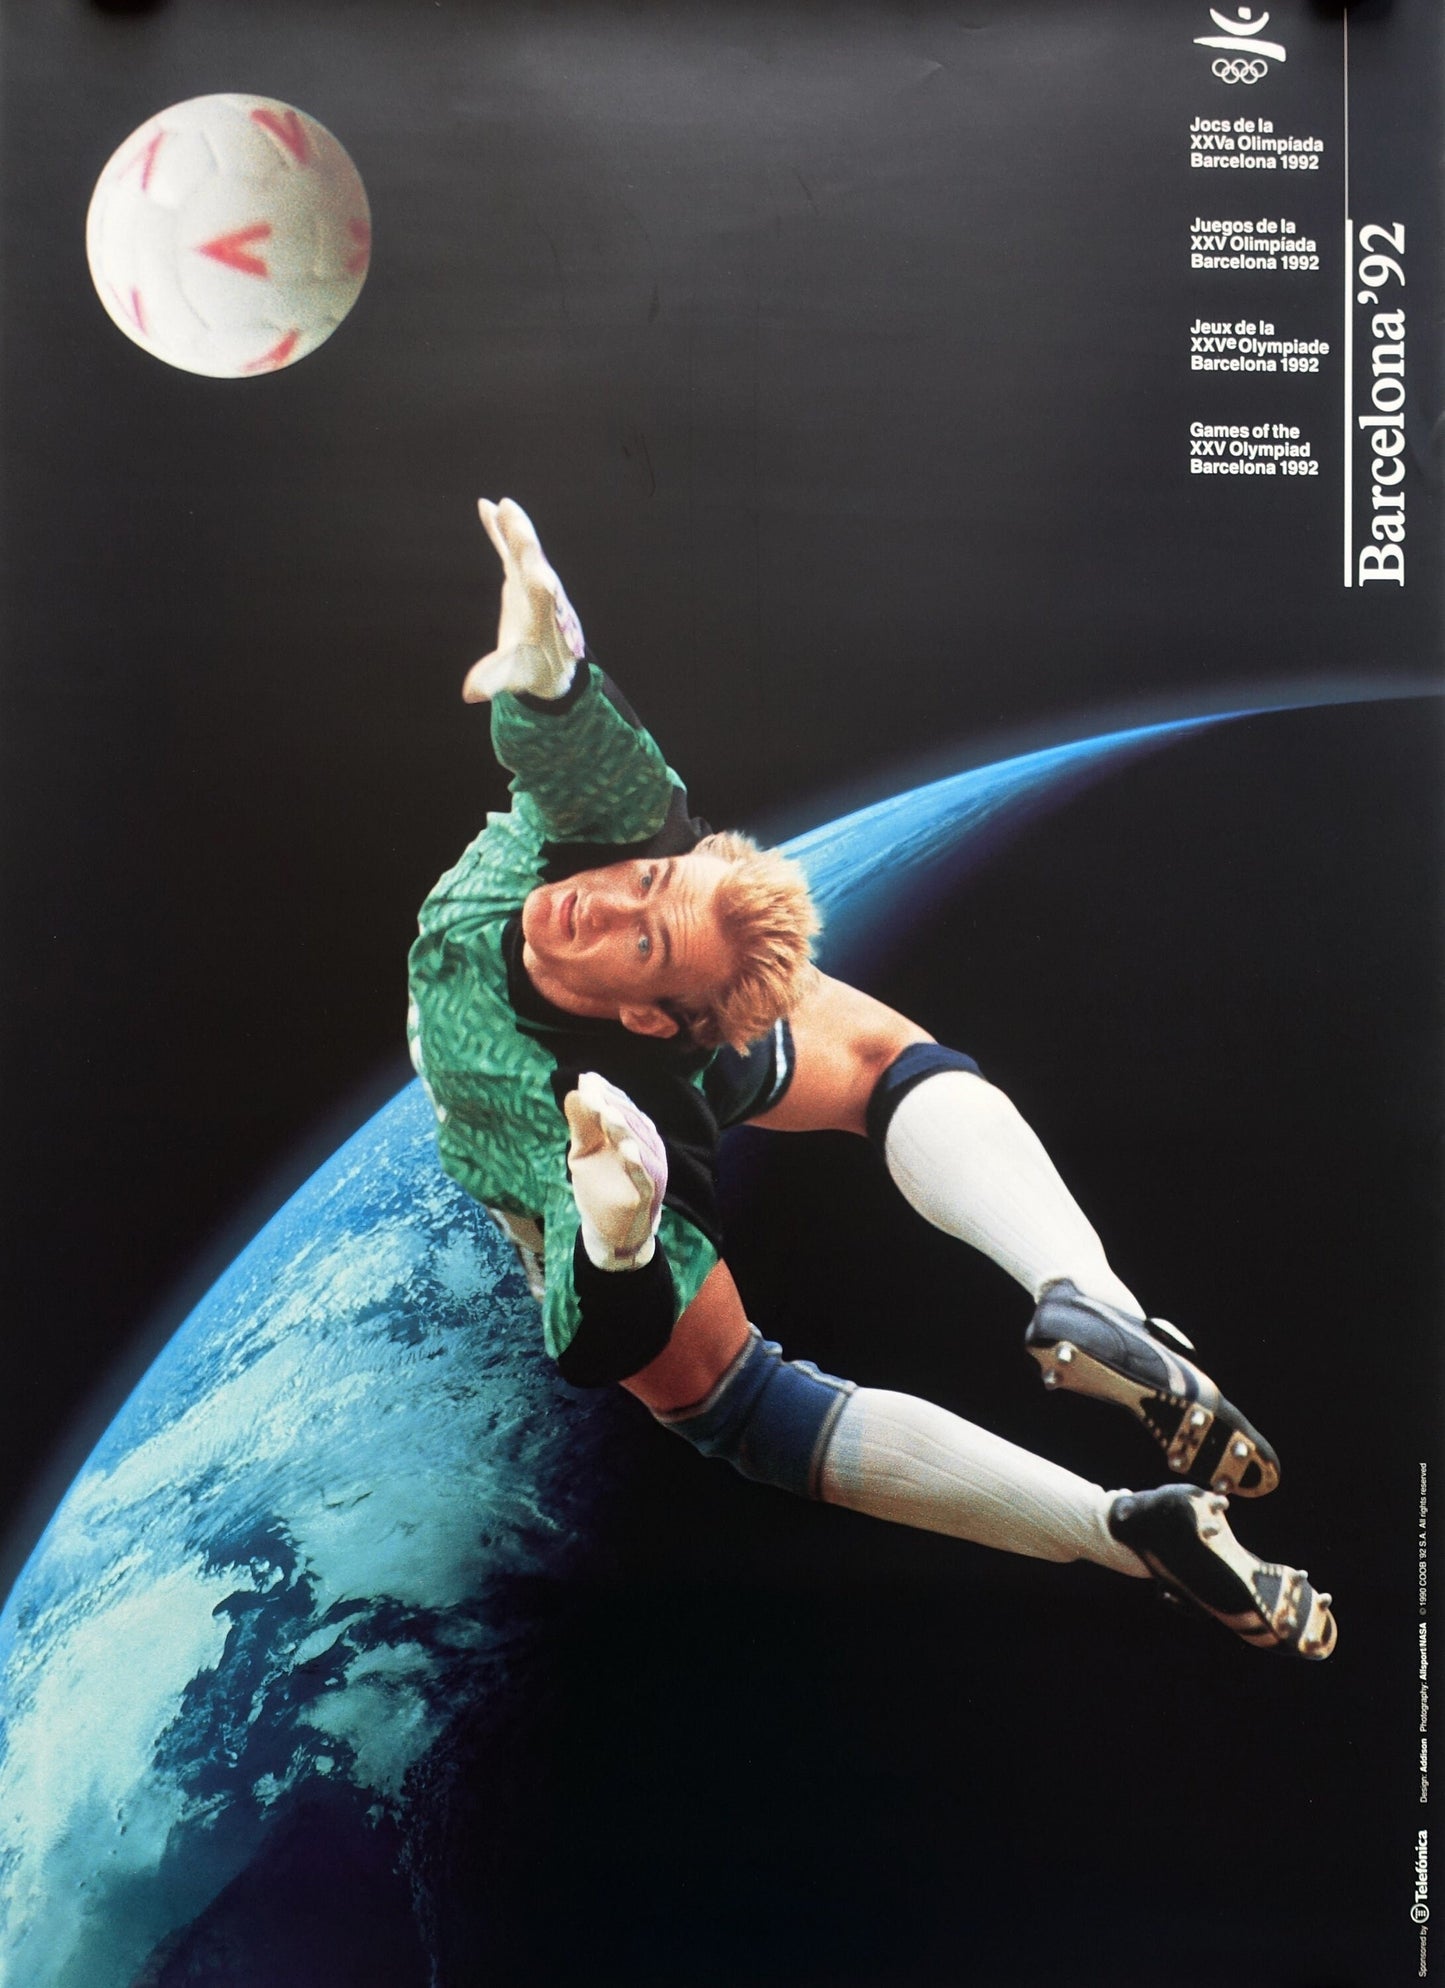 1992 Summer Olympic Games Football - Original Vintage Poster